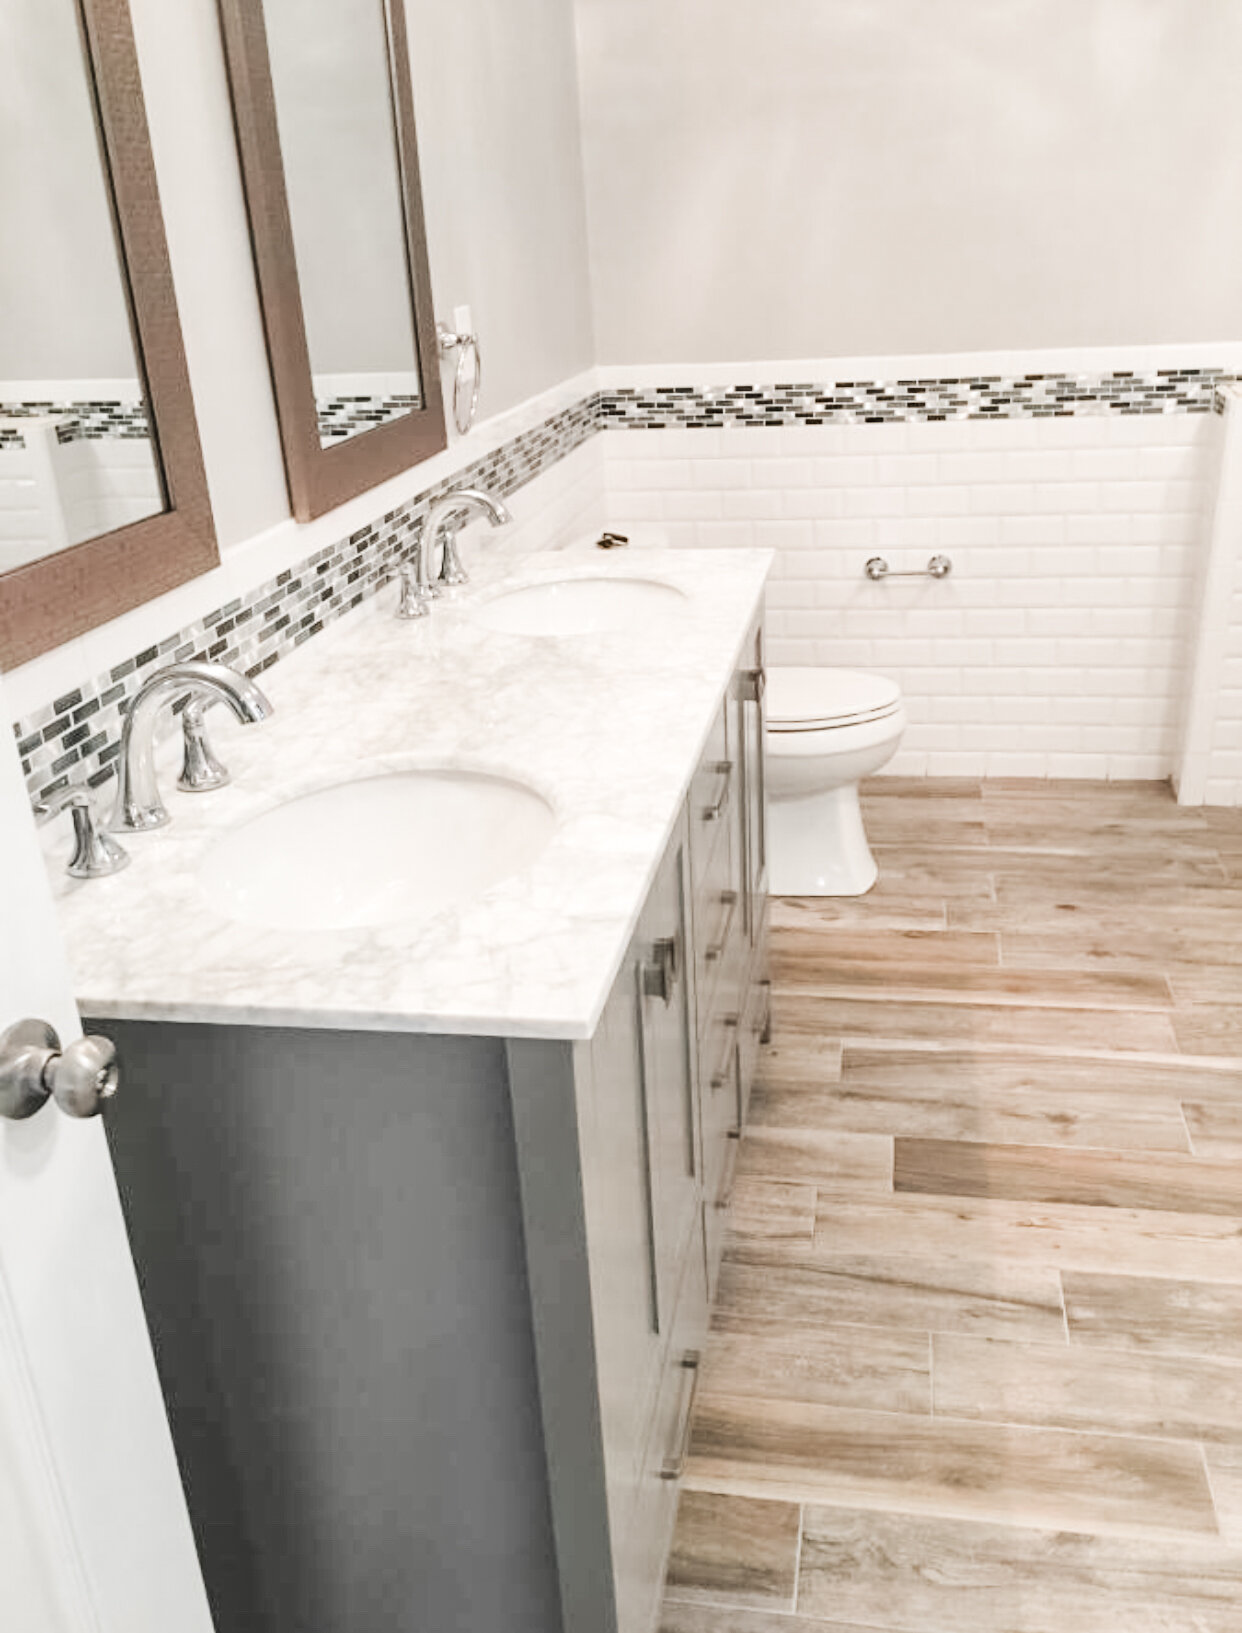 libertyville bathroom remodel 2 lotus home improvement.jpg